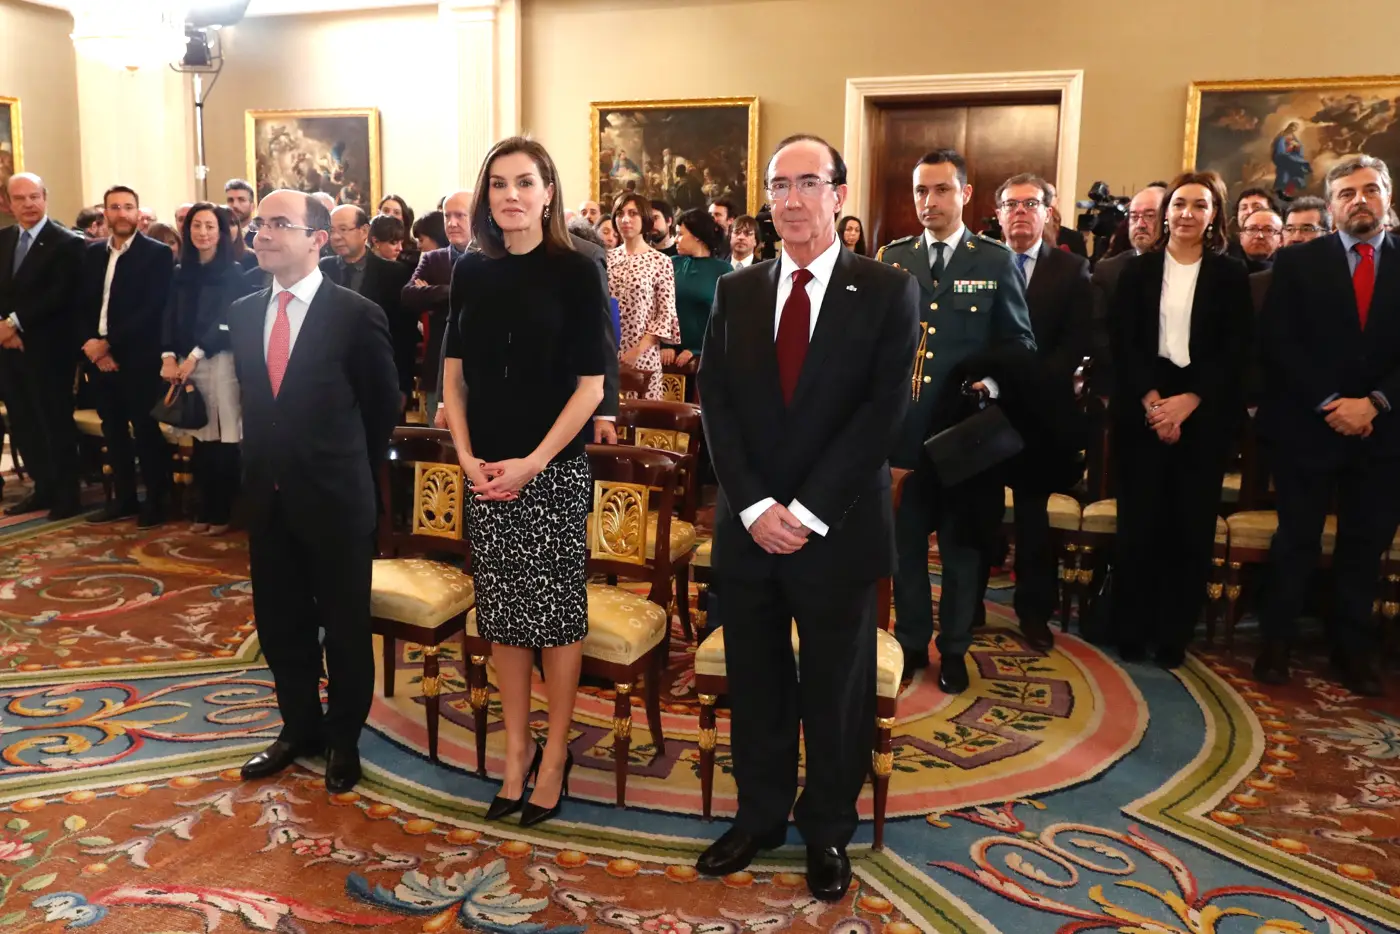 Queen Letizia presented the XXVIII edition of the Premio Tomás Francisco Prieto Awards